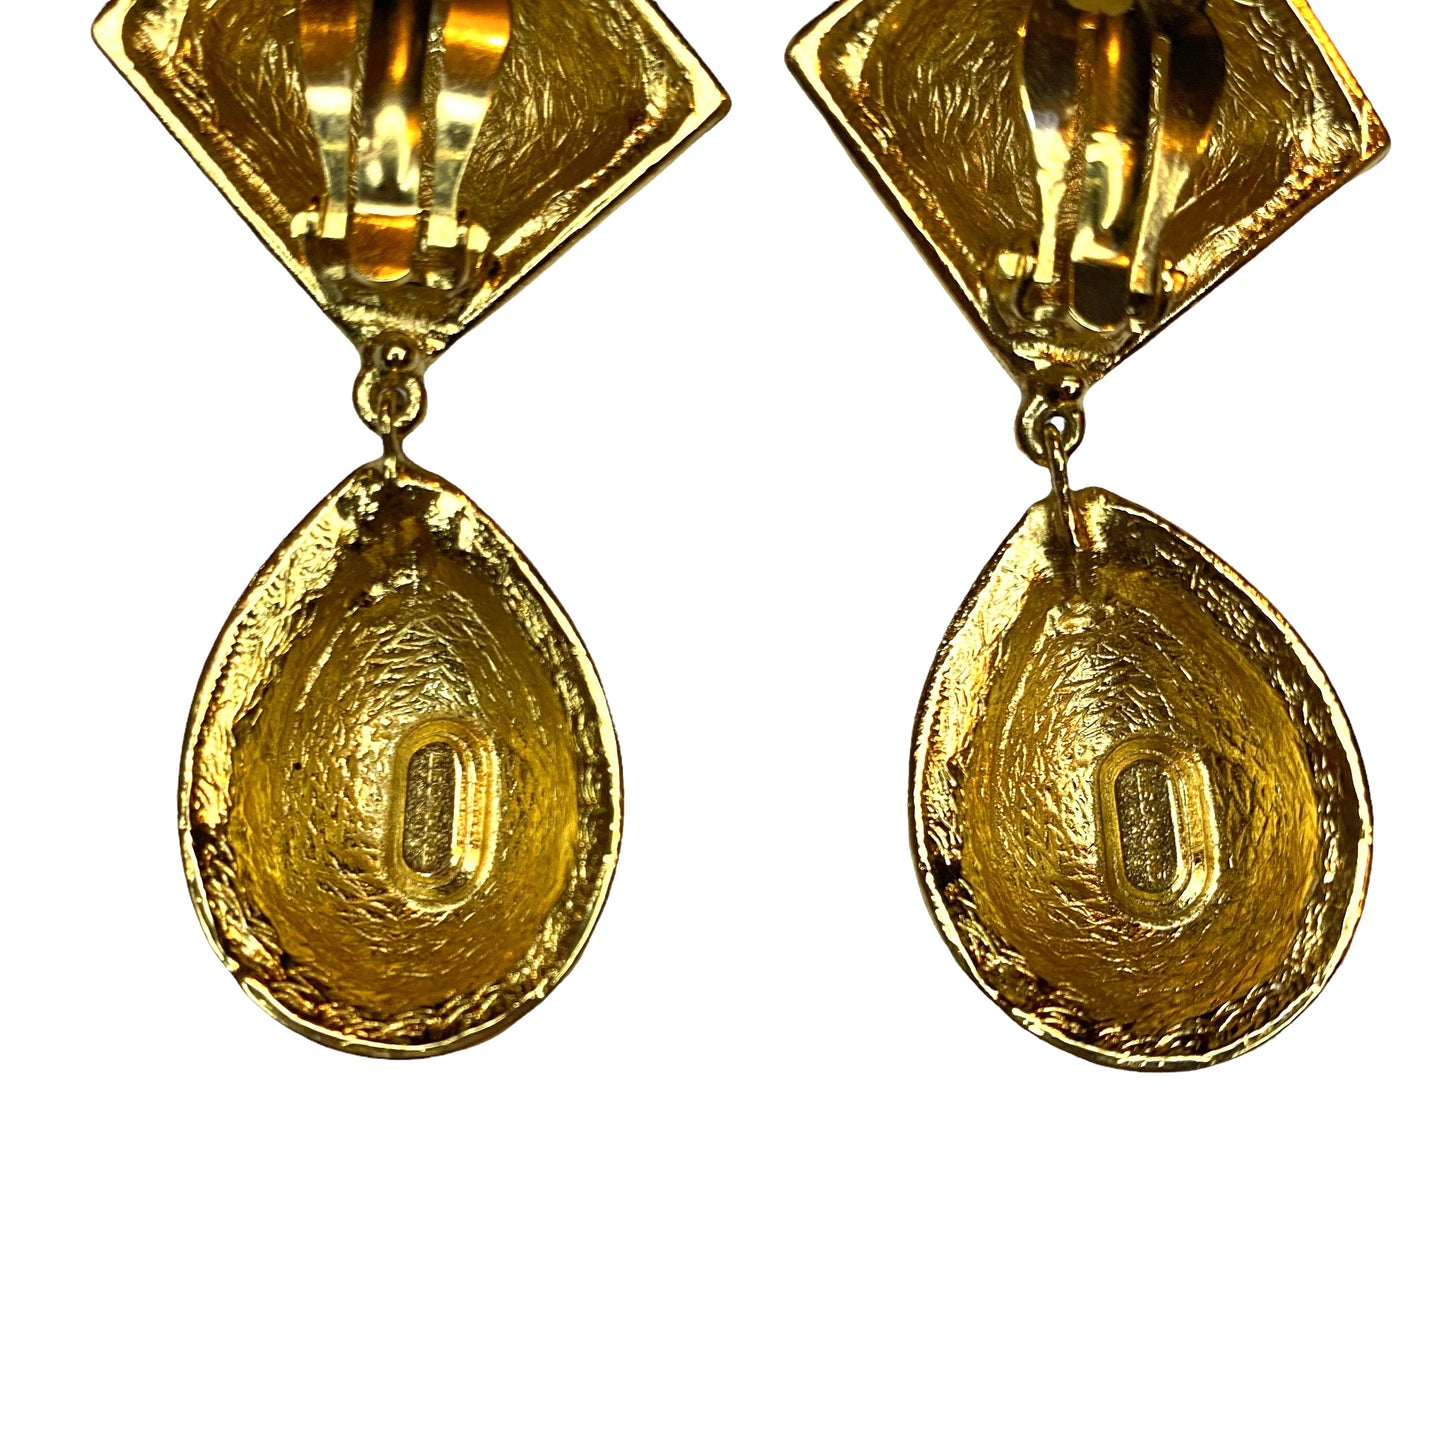 Lysis vintage Leonard vintage pendant clip earrings  - 1990s